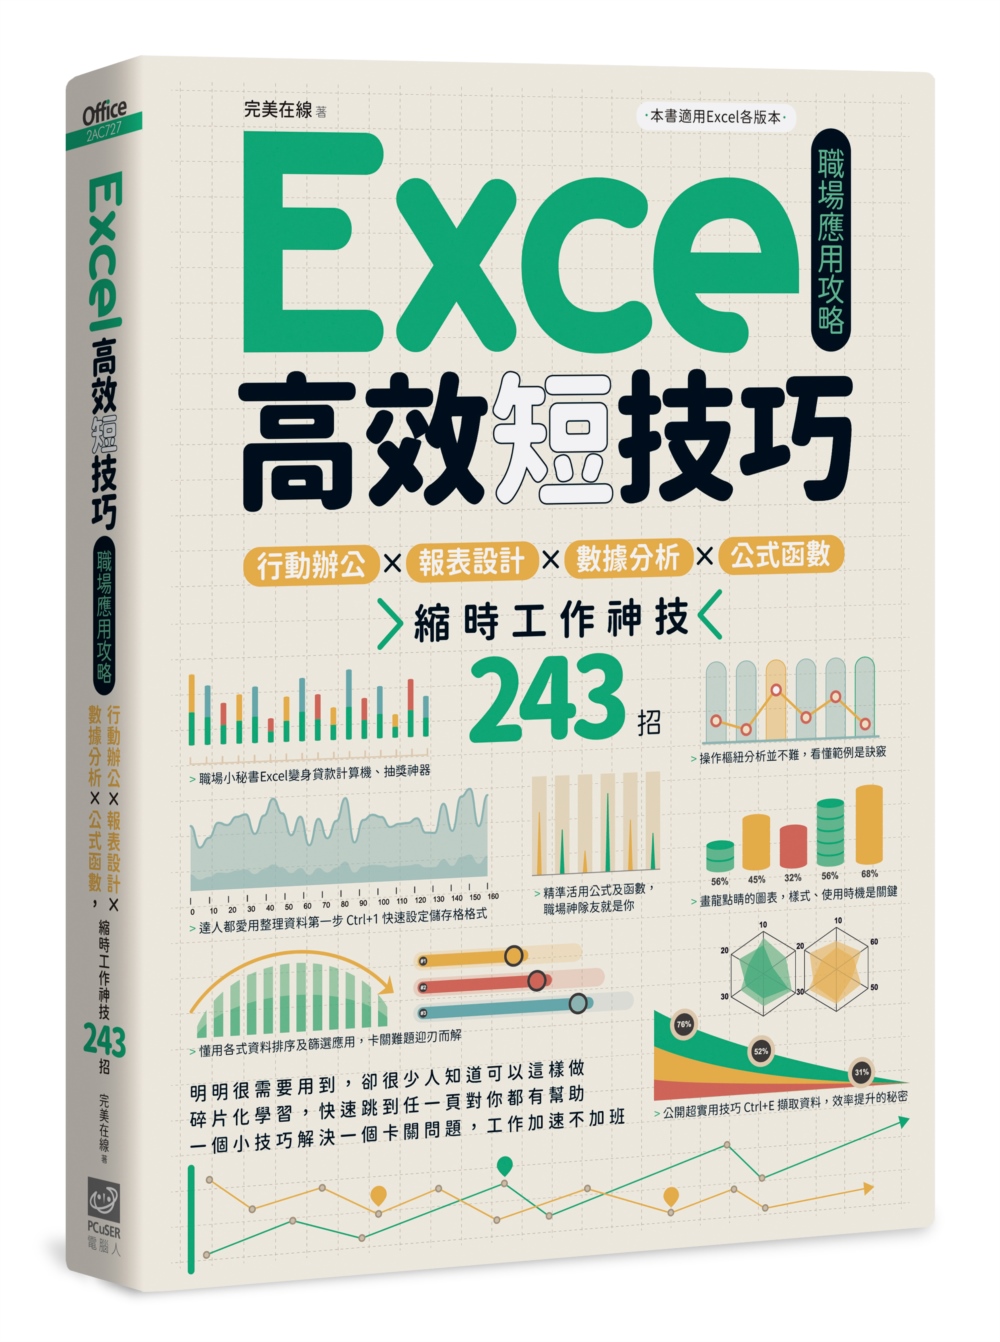 Excel高效短技巧職場應用攻略：行動辦公X報表設計X數據分析X公式函數，縮時工作神技243招